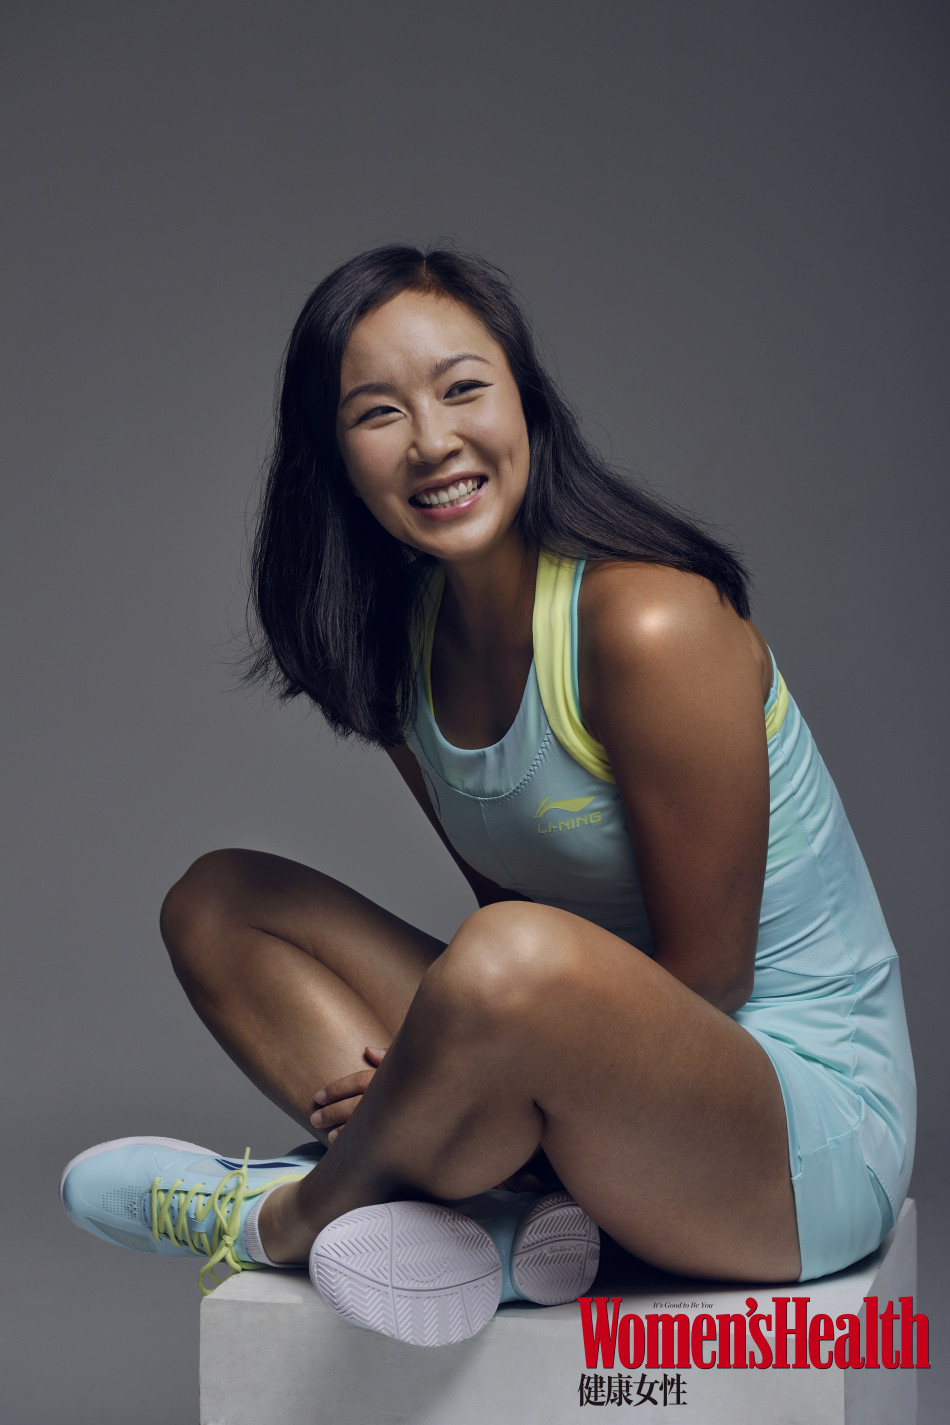 Peng Shuai covers fashion magazine before US Open